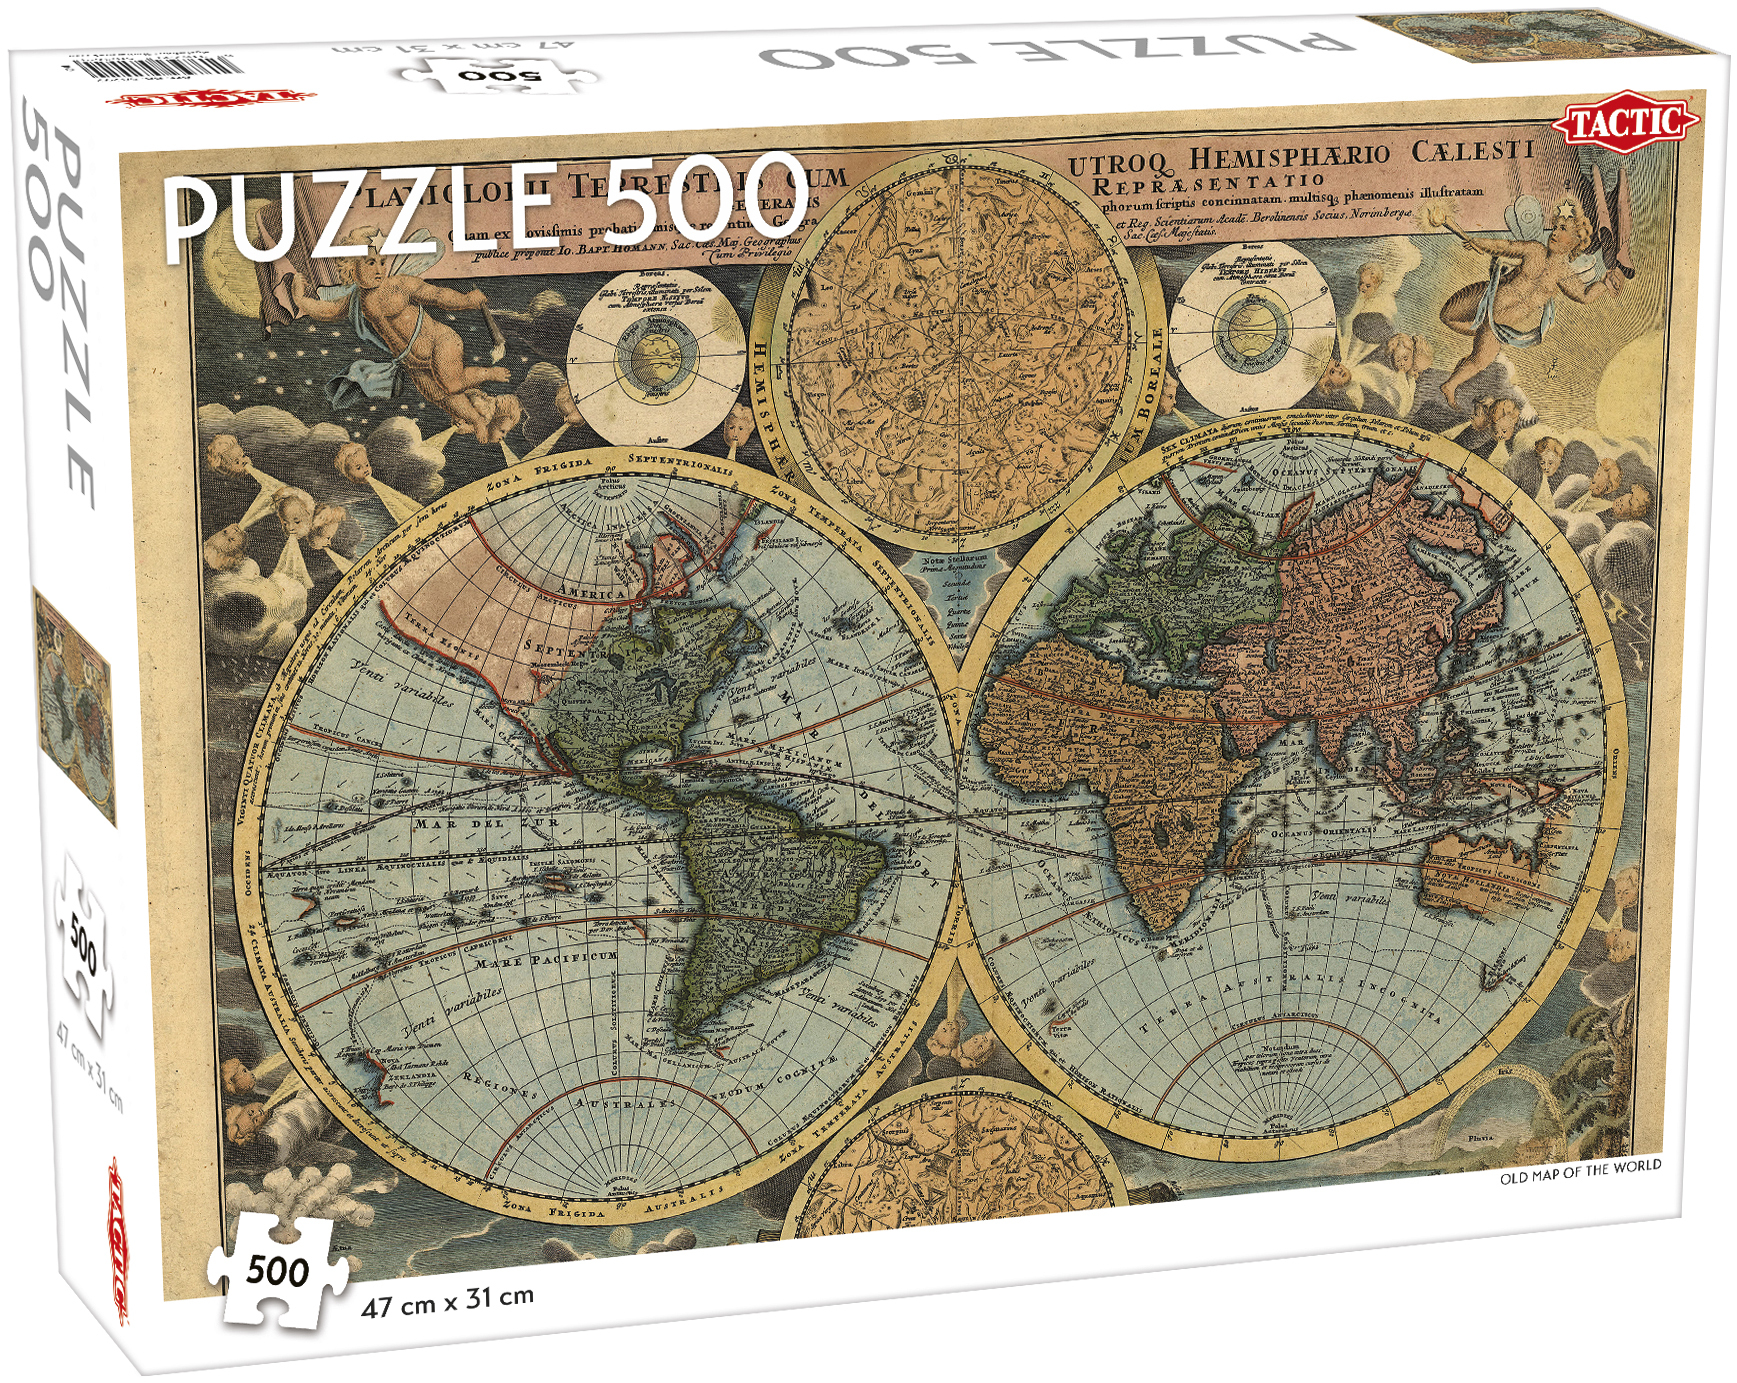 Tactic Old Map of the World 500 Stukjes